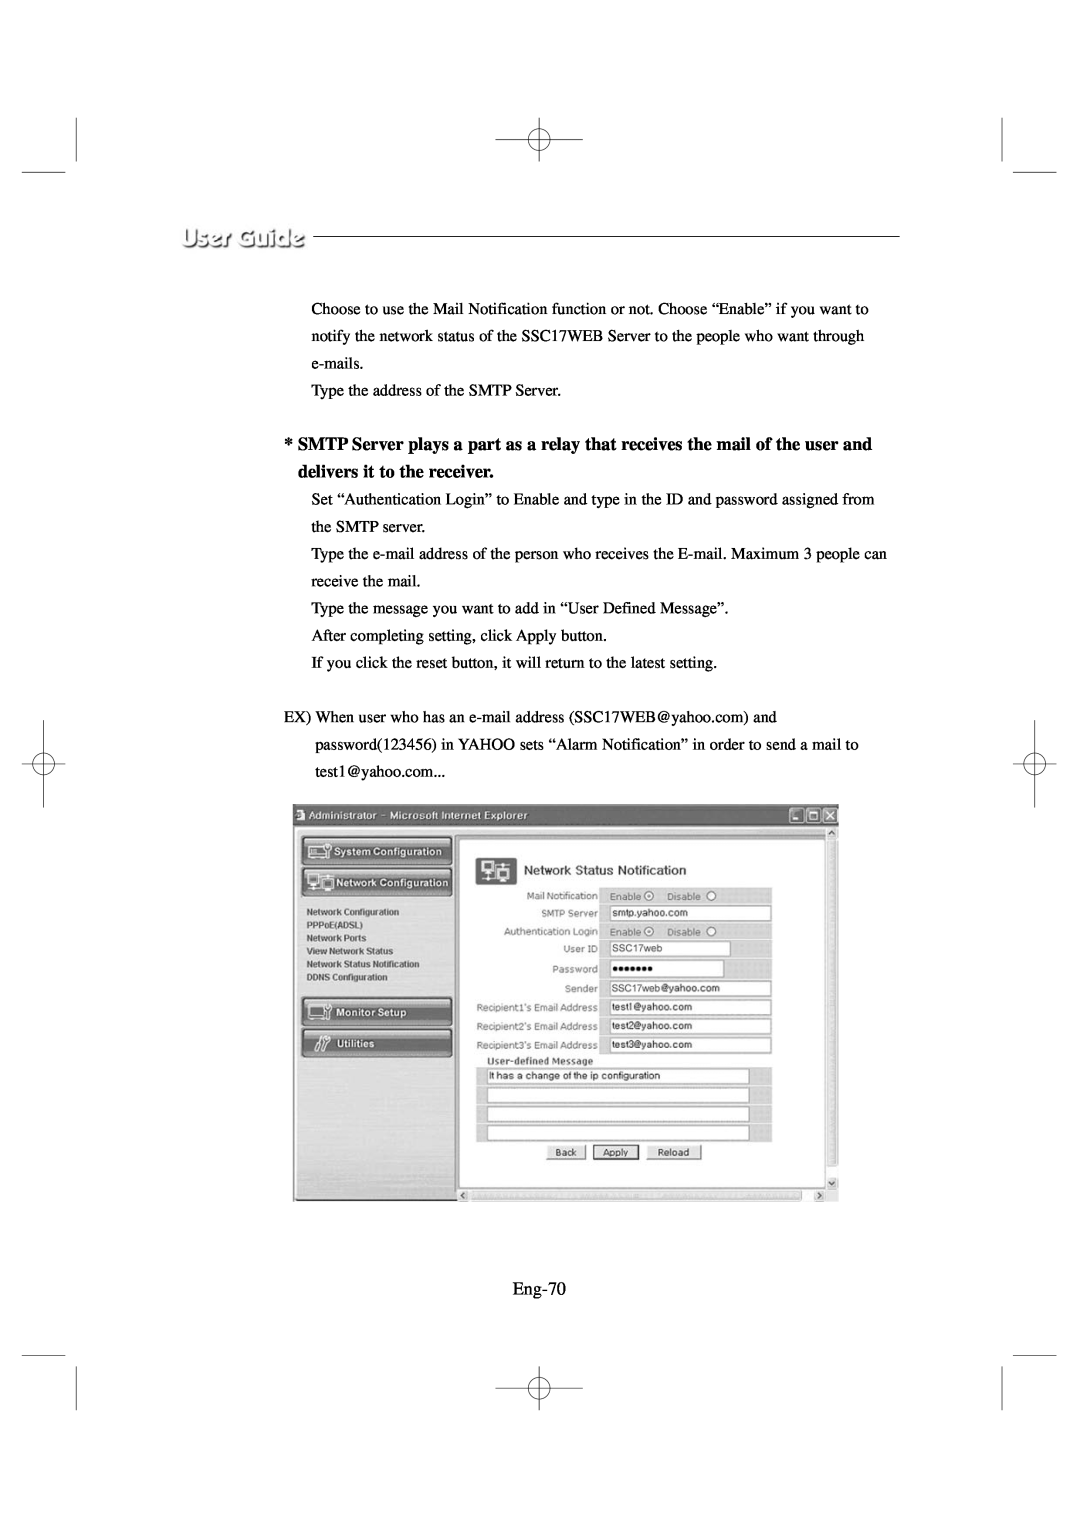 Samsung SSC17WEB manual Eng-70 